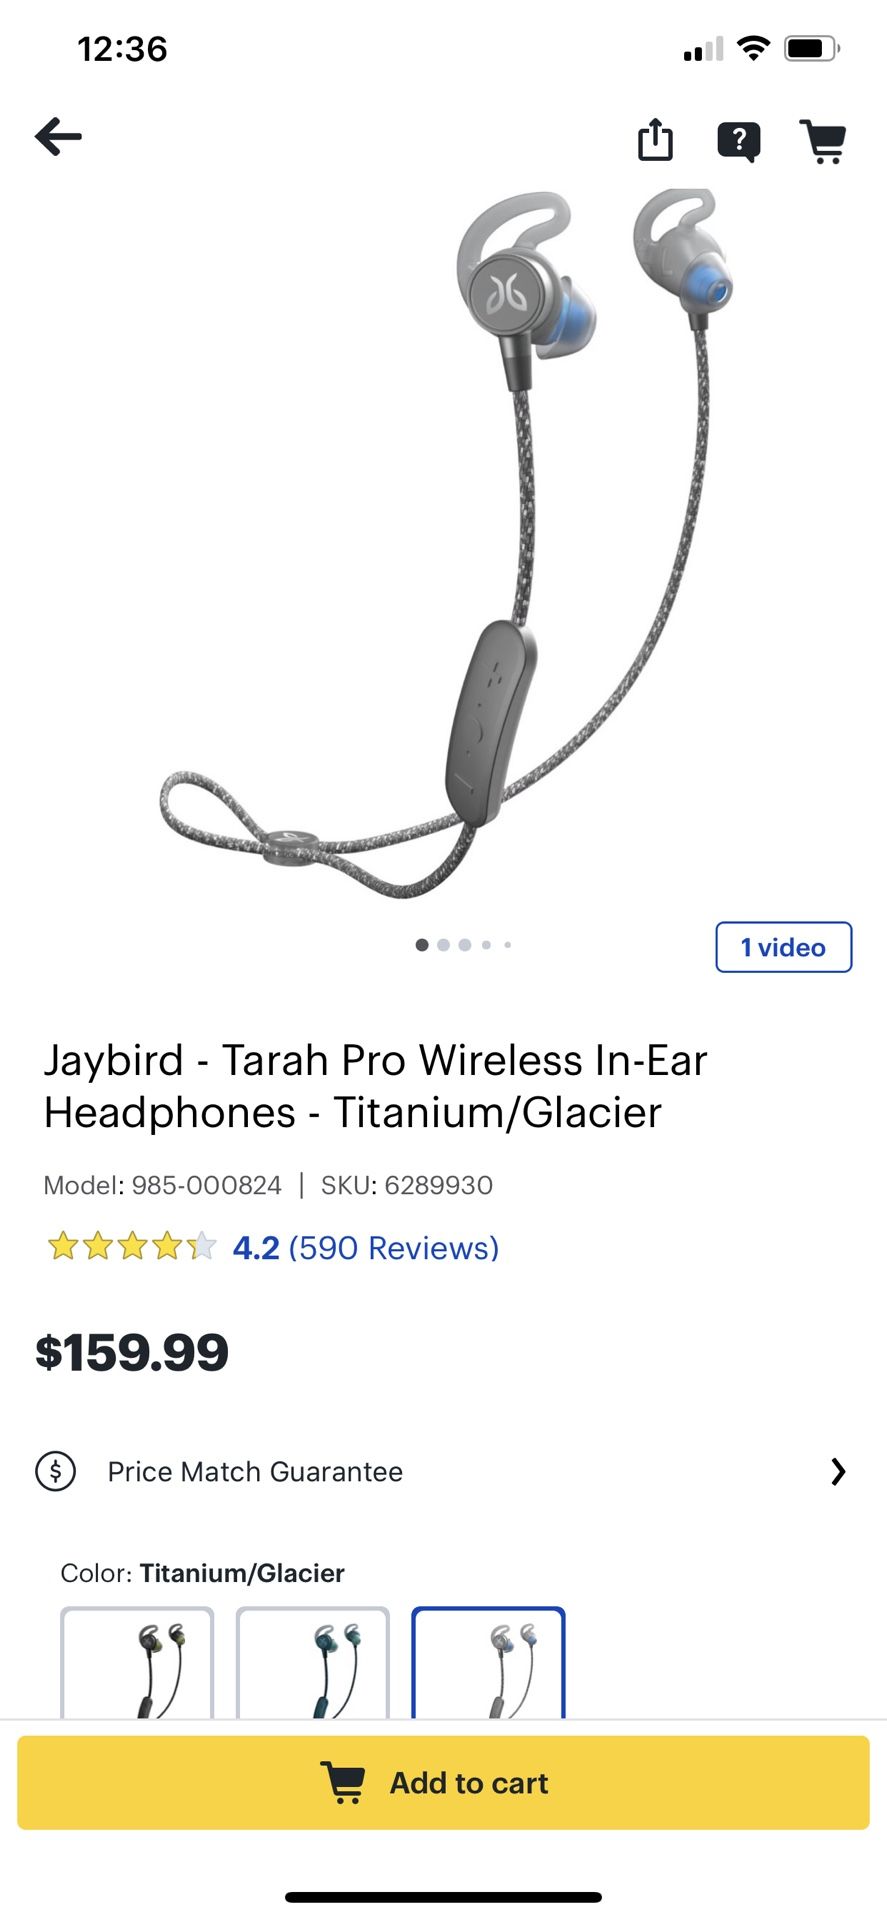 Jaybird Tarah Pro Wireless In-Ear Headphones - Titanium/Glacier - Model:985-000824